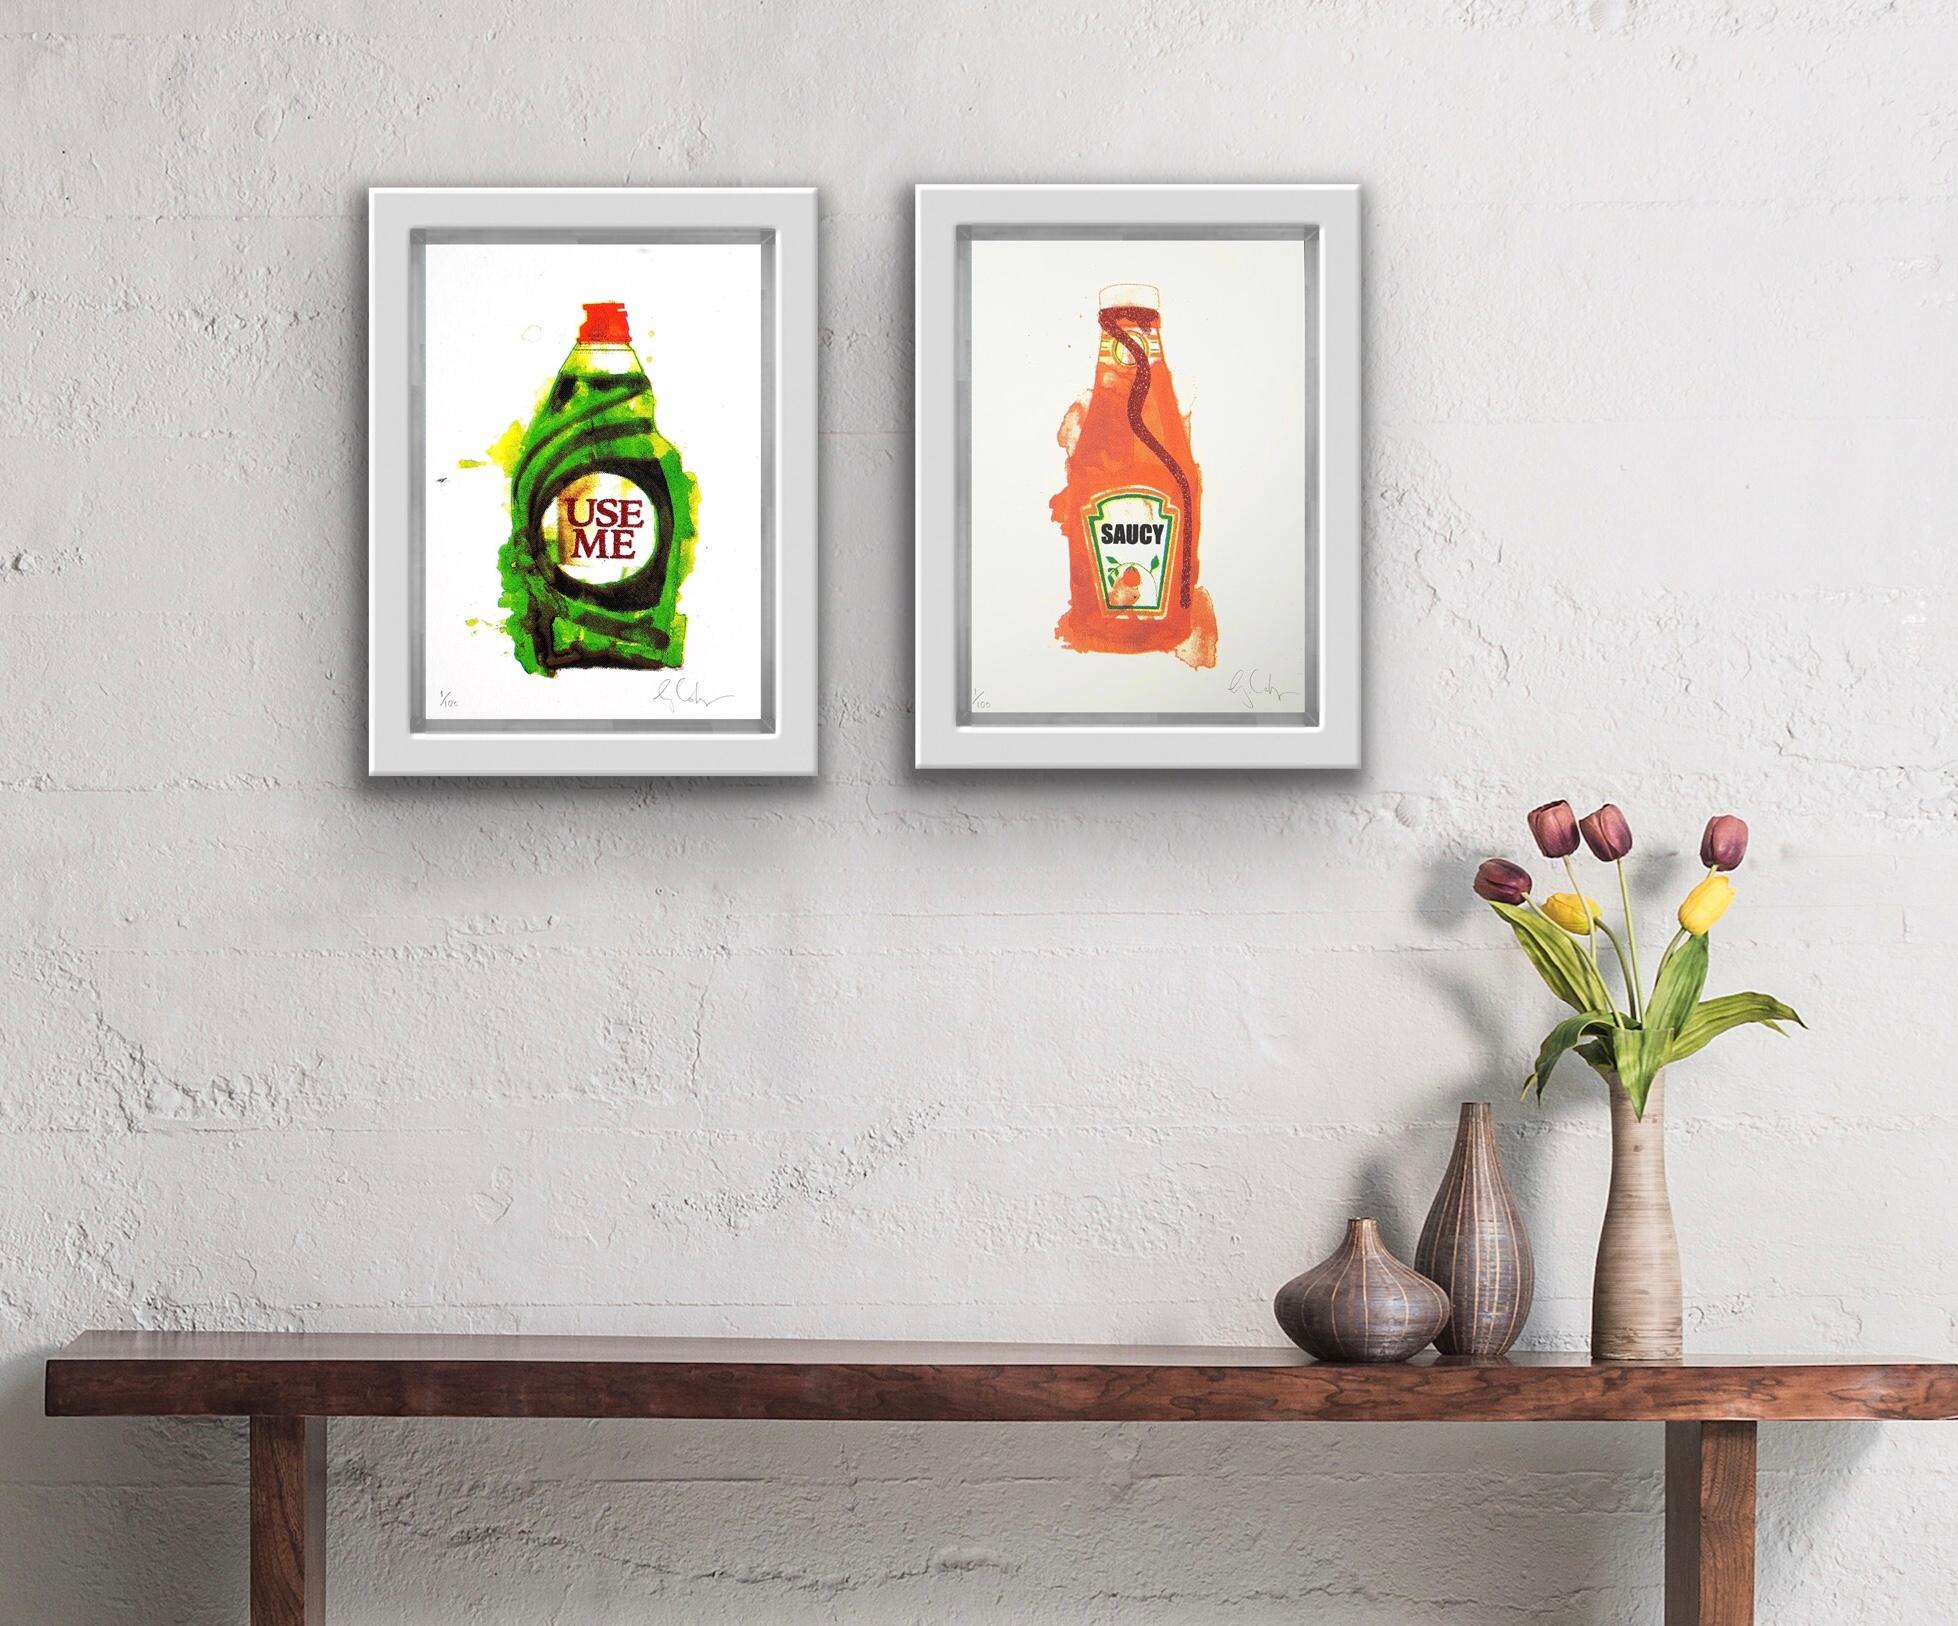 Mini Saucy and Use Me Mini diptych - Pop Art Print by Gavin Dobson